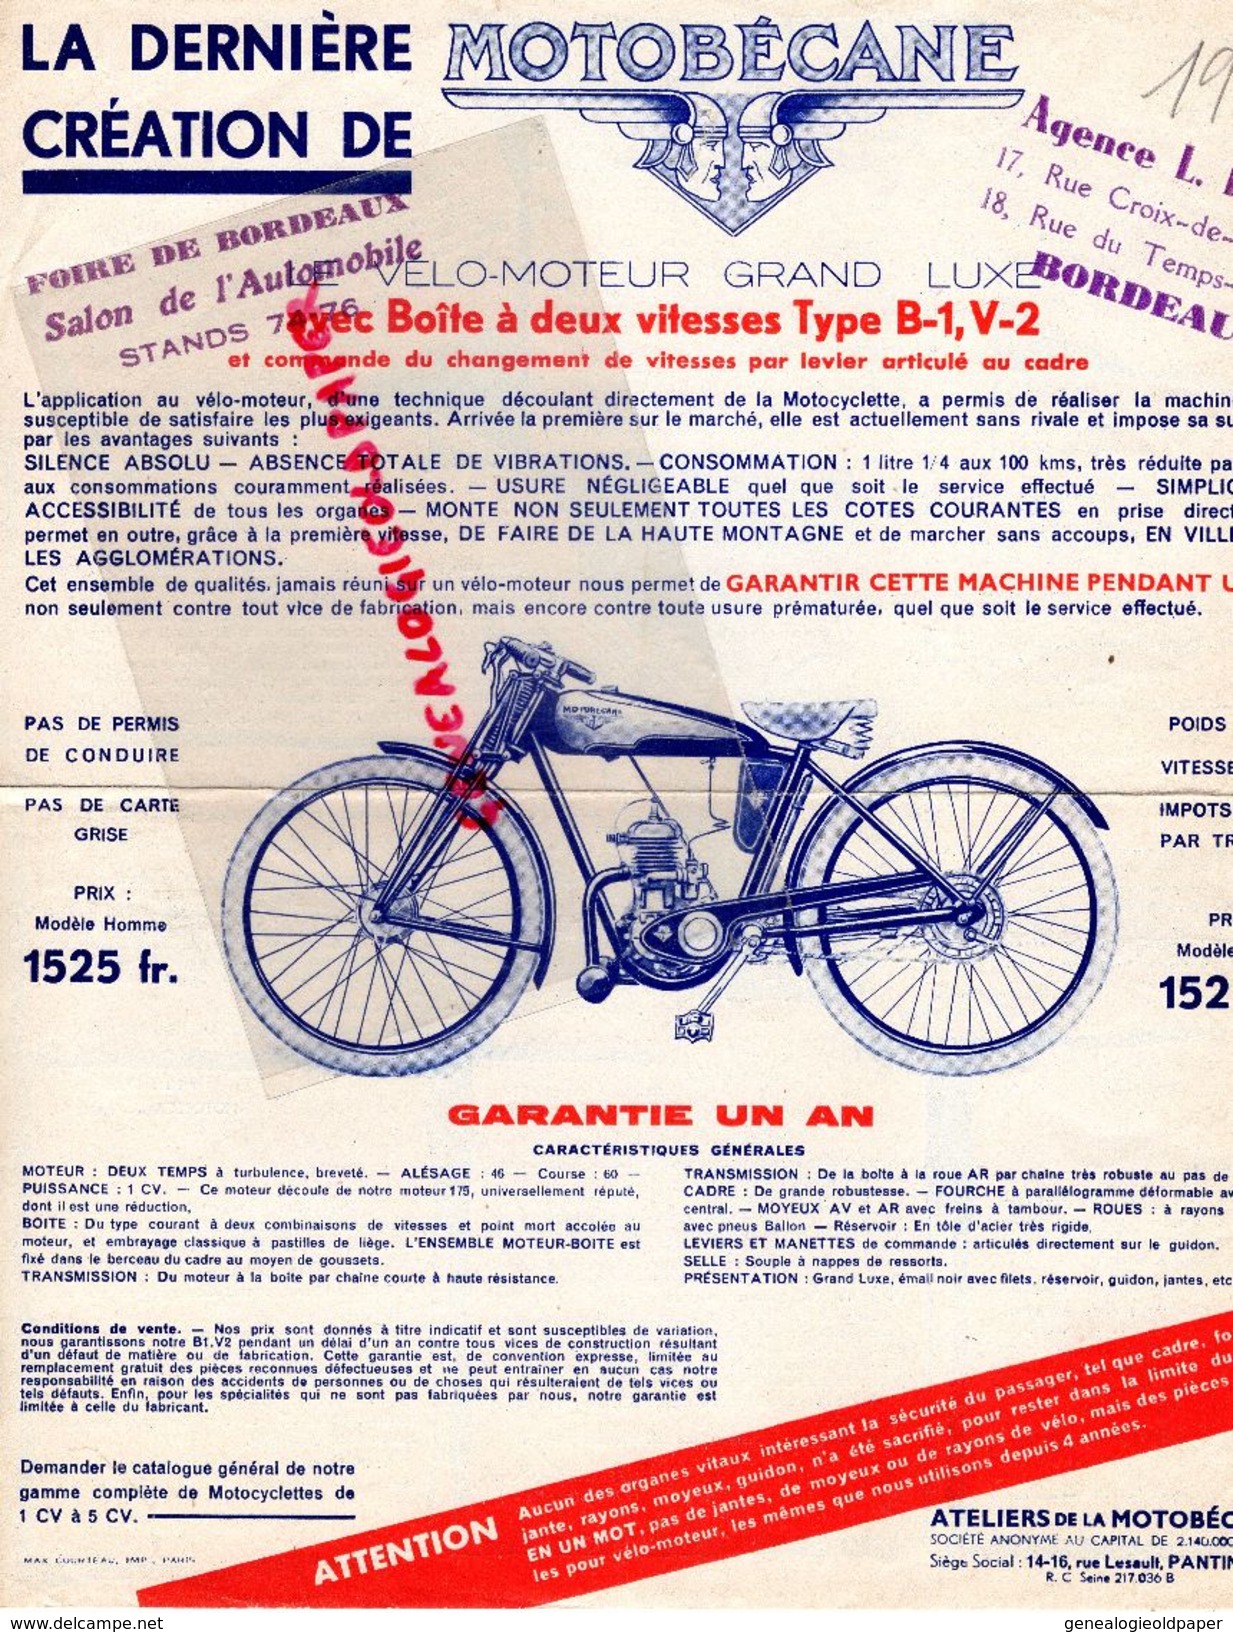 93- PANTIN-AGENCE BORDEAUX L. DELERME- FOIRE SALON AUTOMOBILE- MOTOBECANE VELO MOTEUR GRAND LUXE TYPE B1 V2-MOTO-1934 - Verkehr & Transport